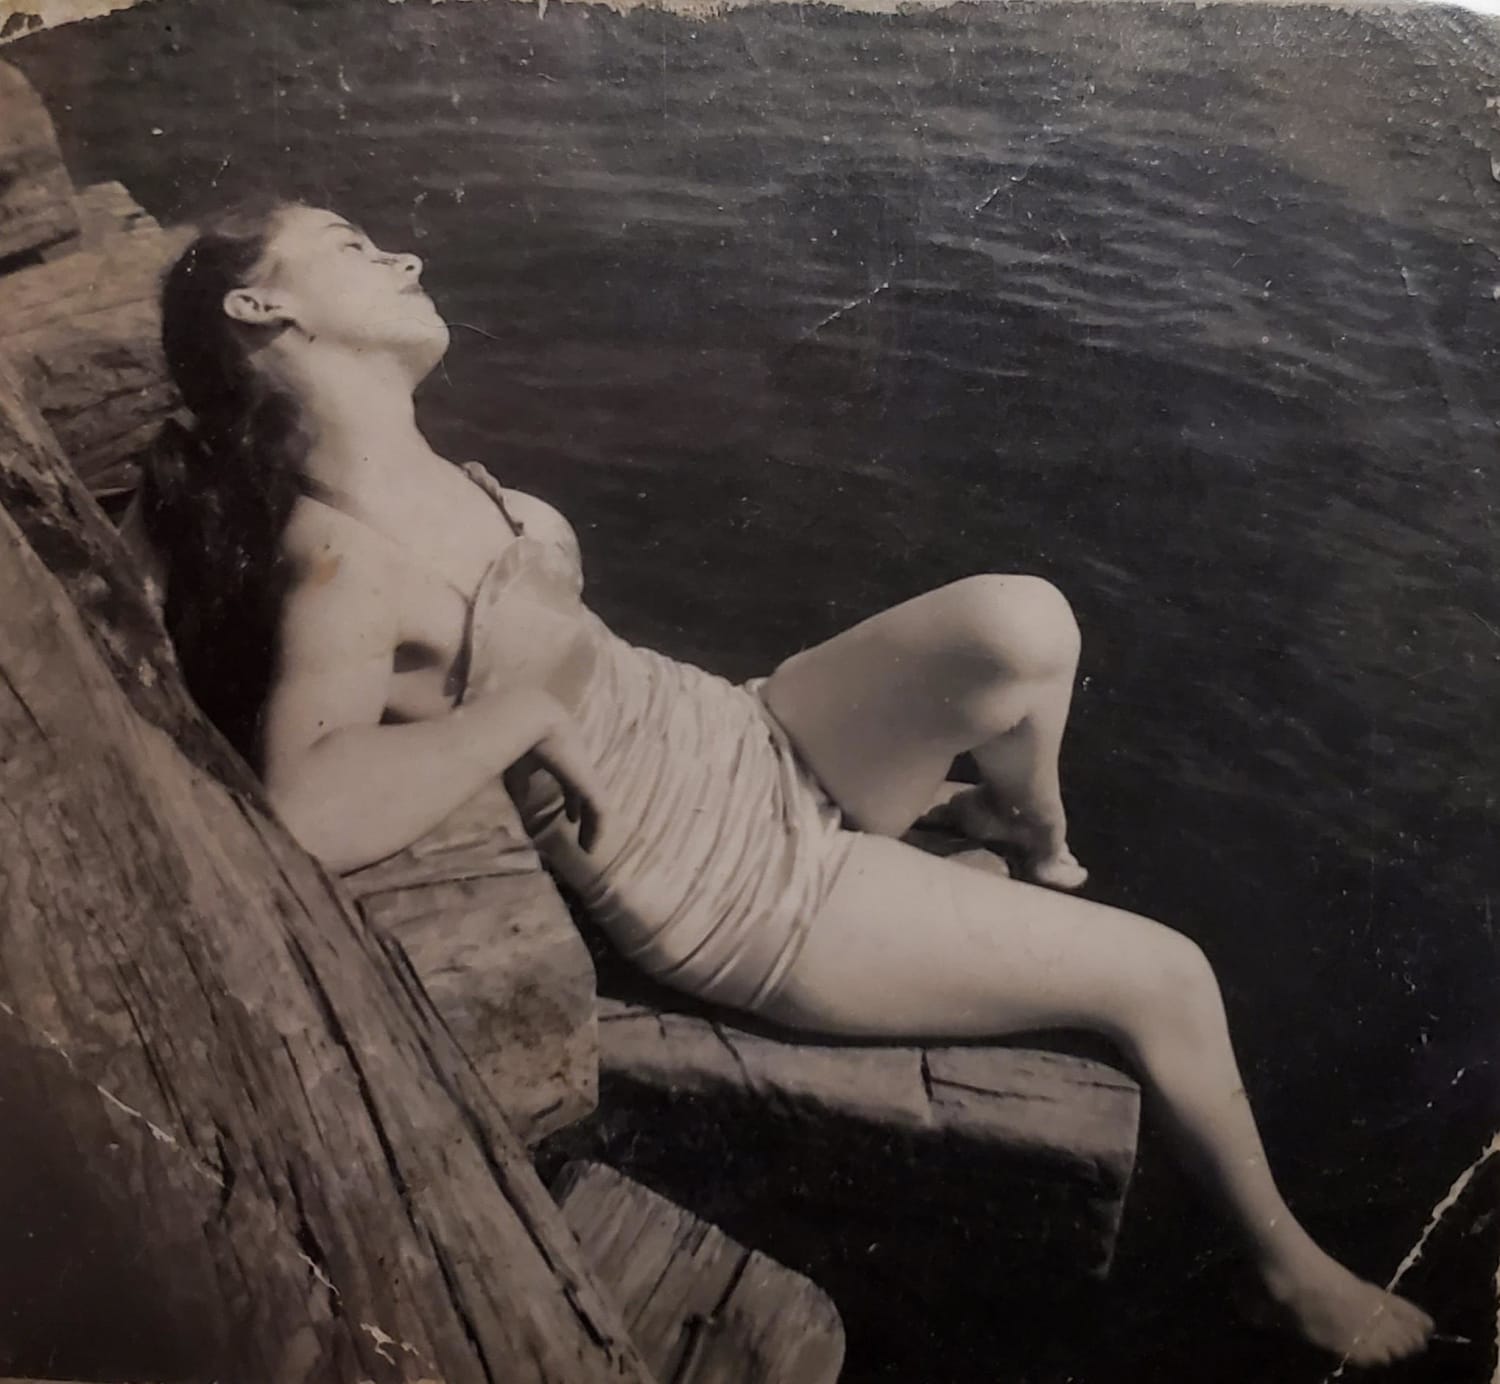 My Grandmother Sunbathing On The Rocks Of The Hudson River, 1955.